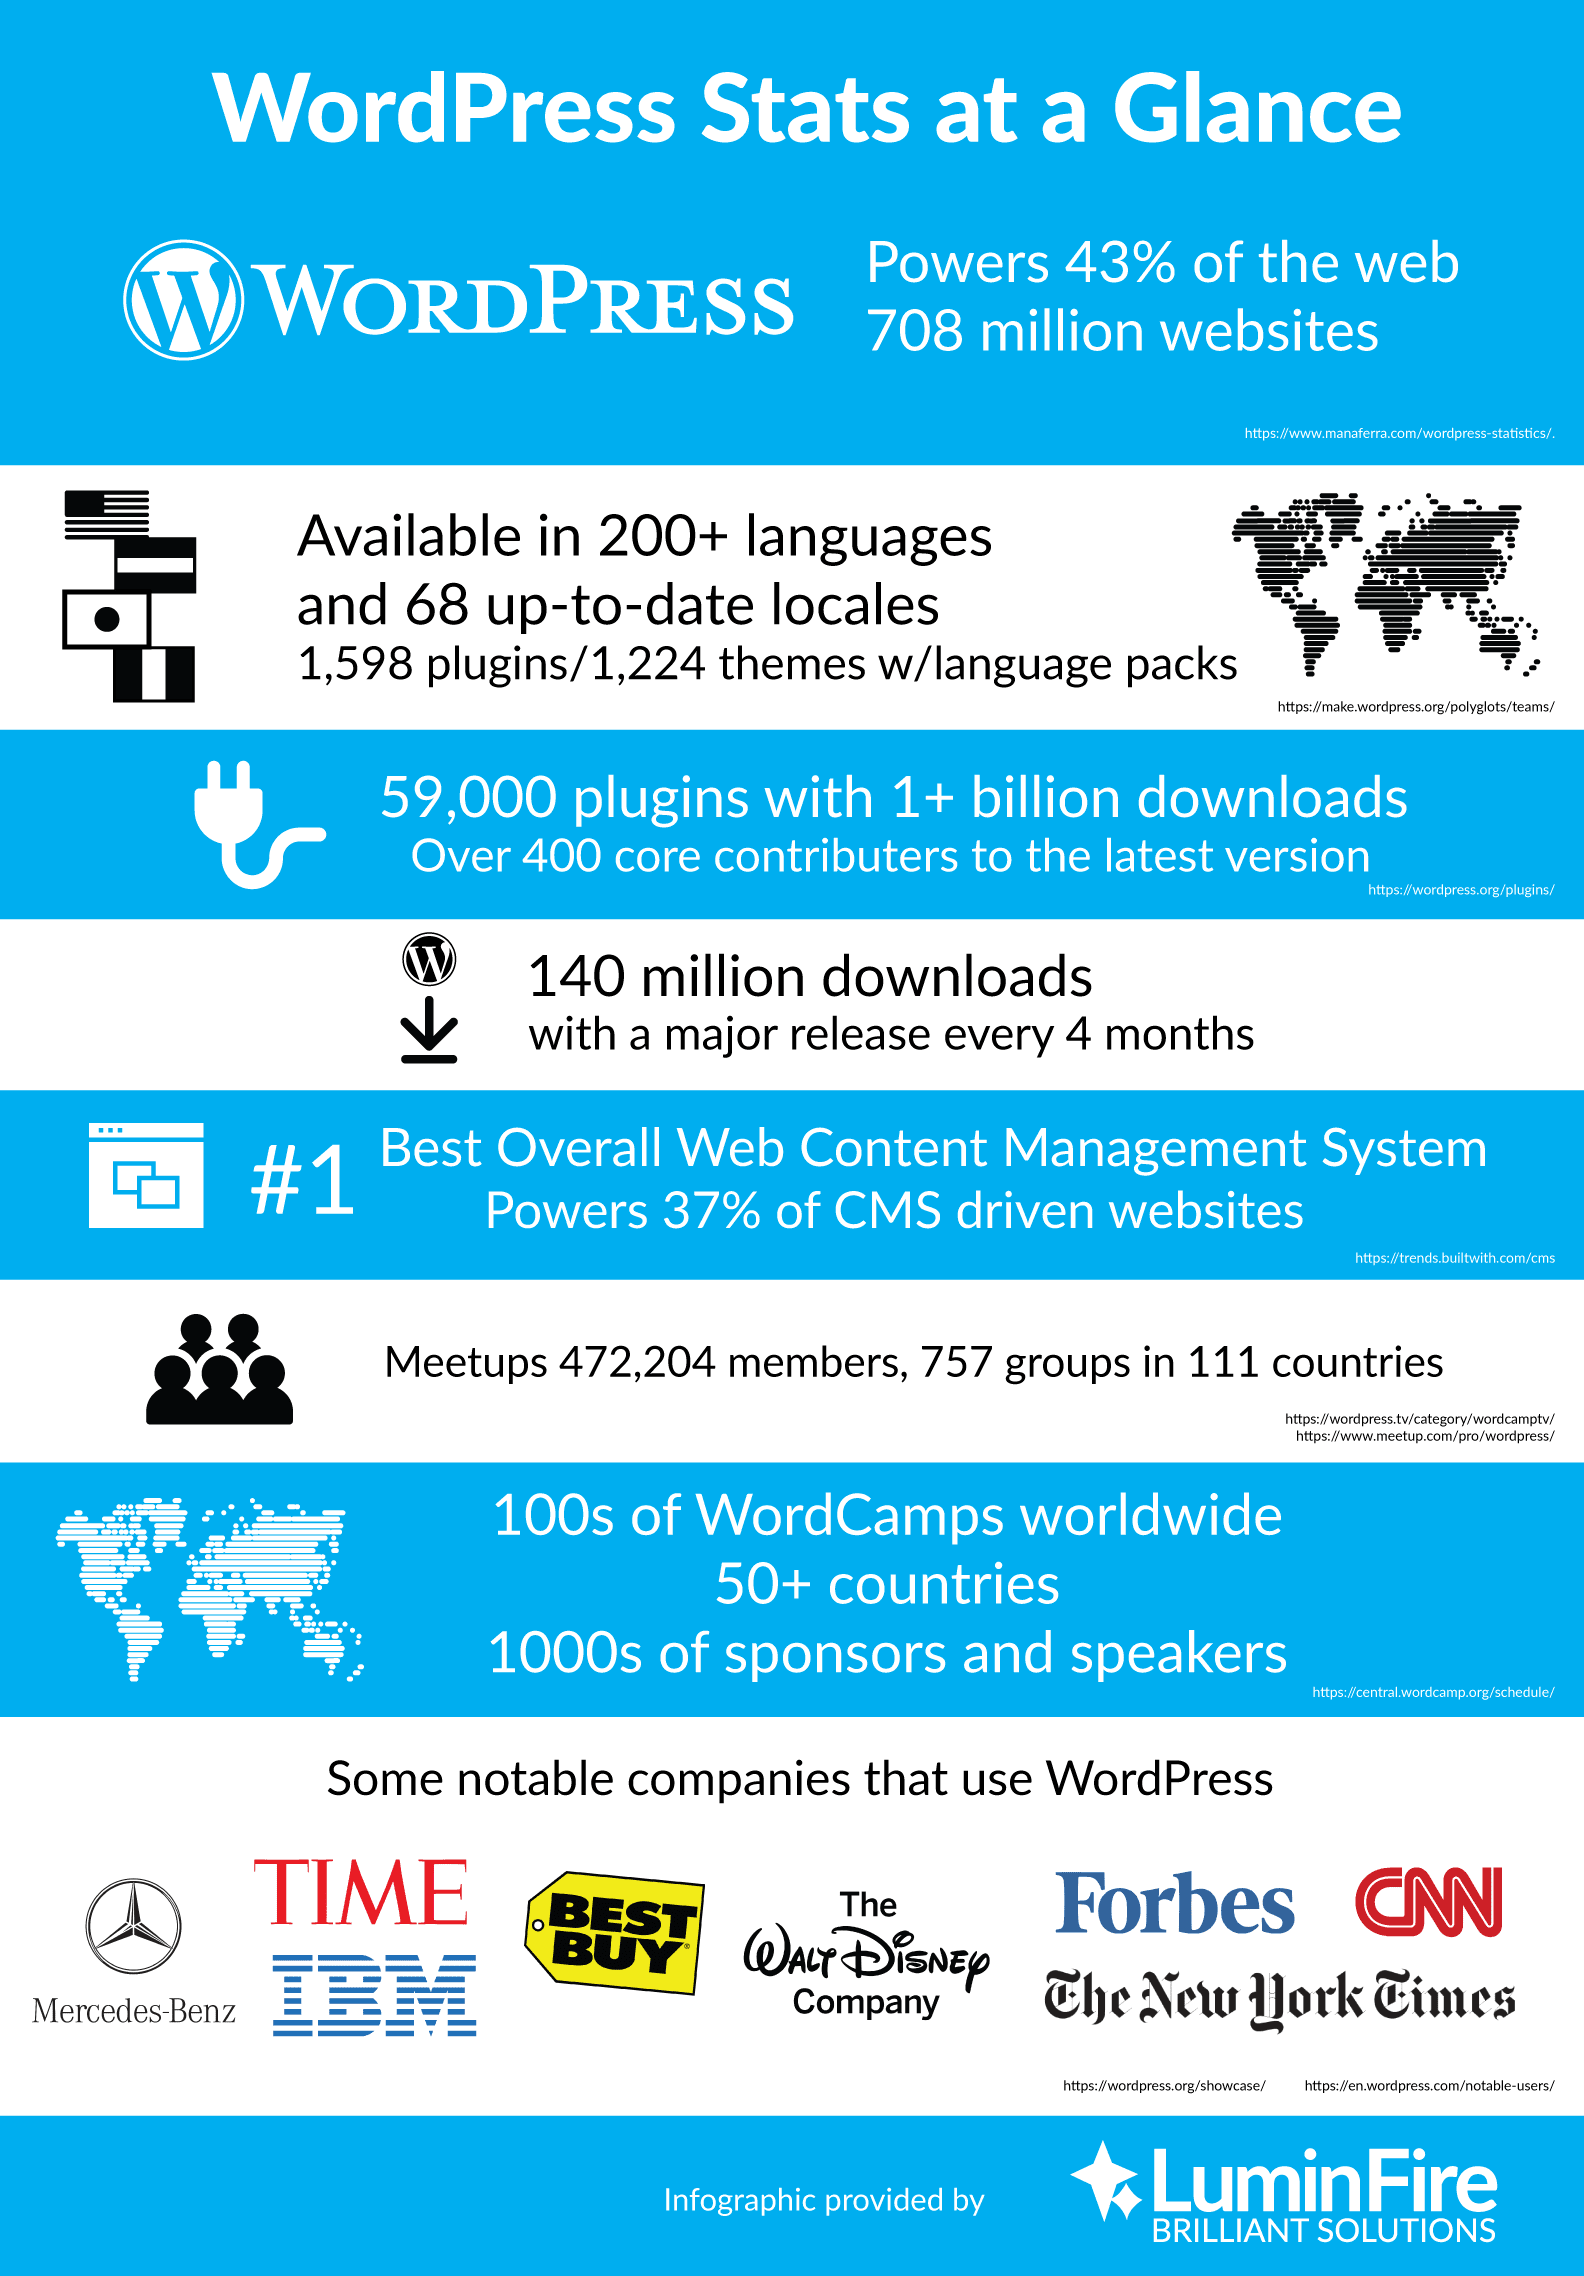 https://luminfire.com/wp-content/uploads/2021/10/2021-WordPress-Stats-InfoGraphic.png